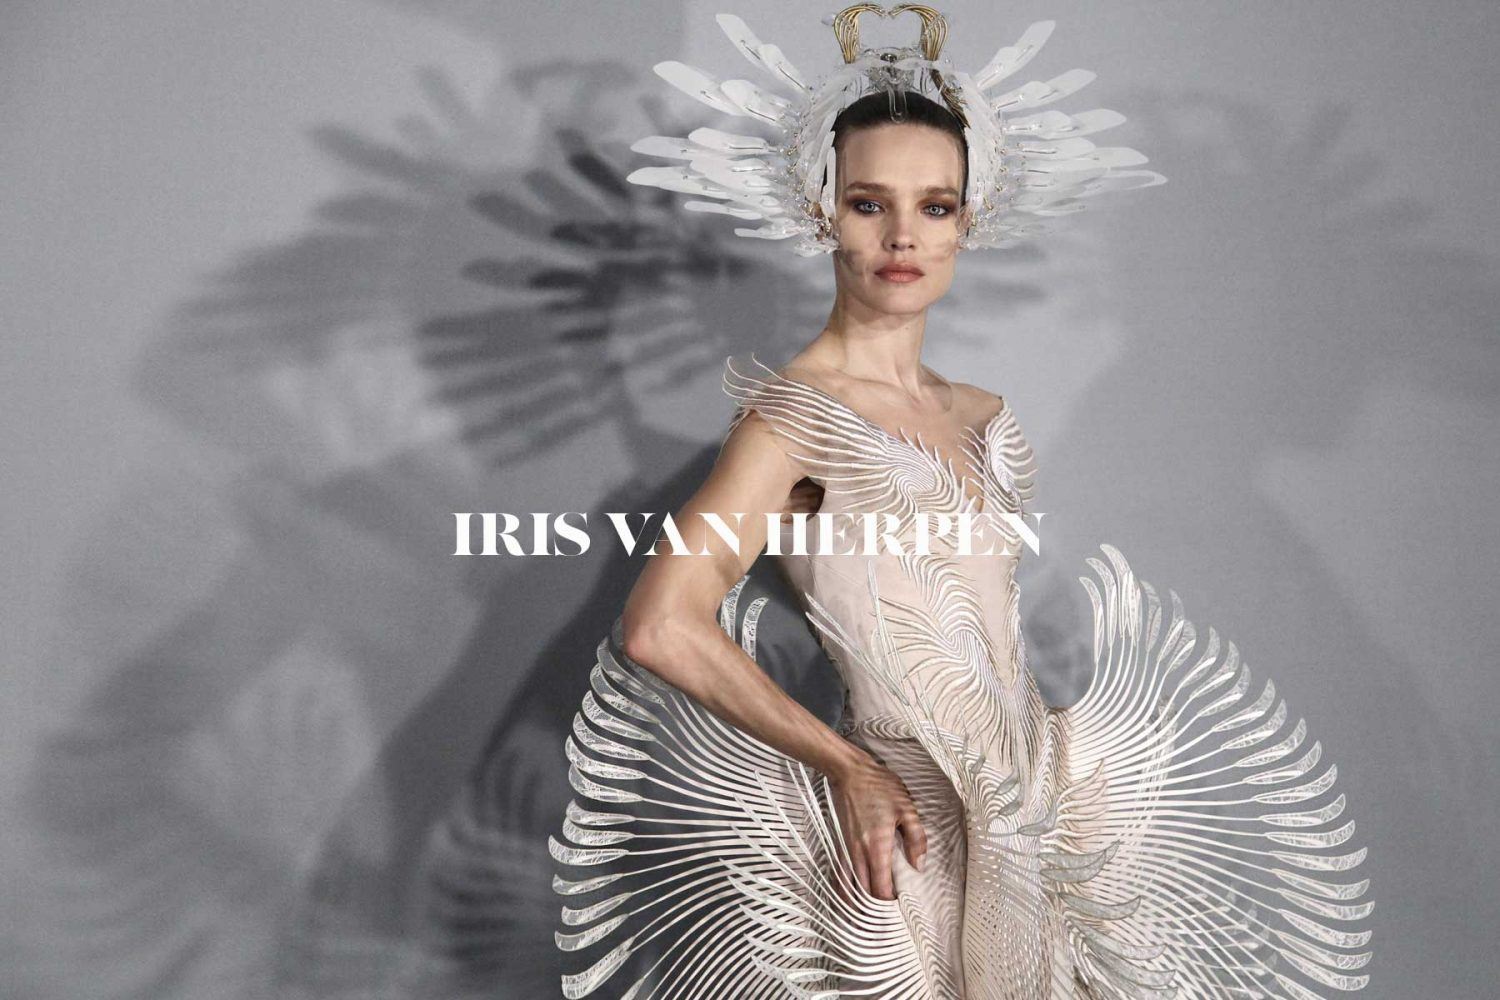 Paris Fashion Week: Iris van Herpen's 'flowing paint' gowns and